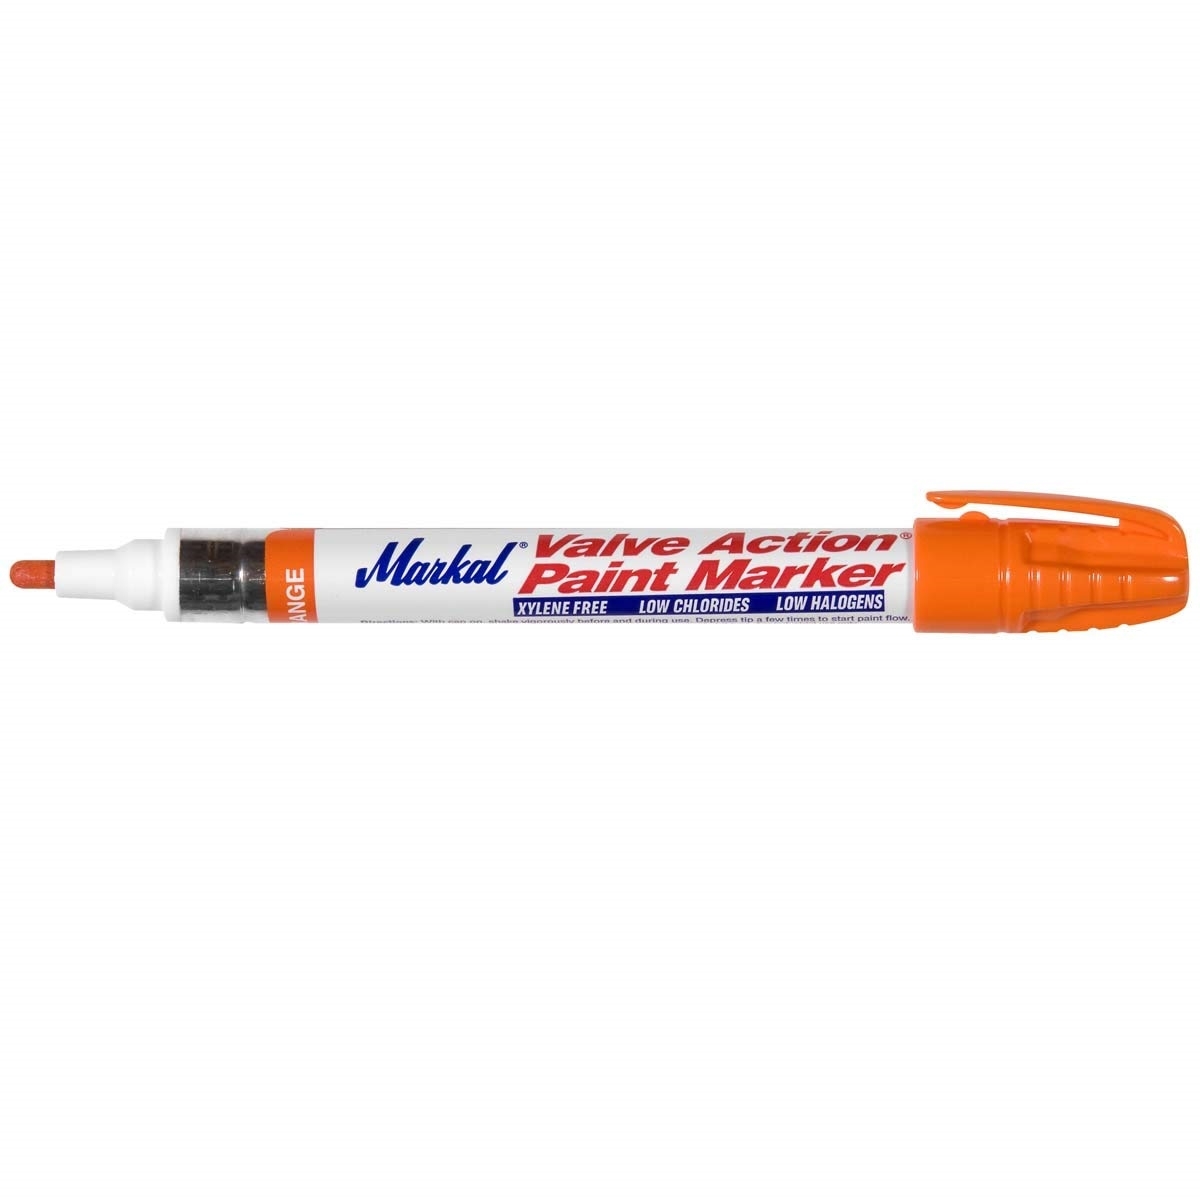 434-96824 Valve Action Paint Markers, Orange, 1/8 in, Medium